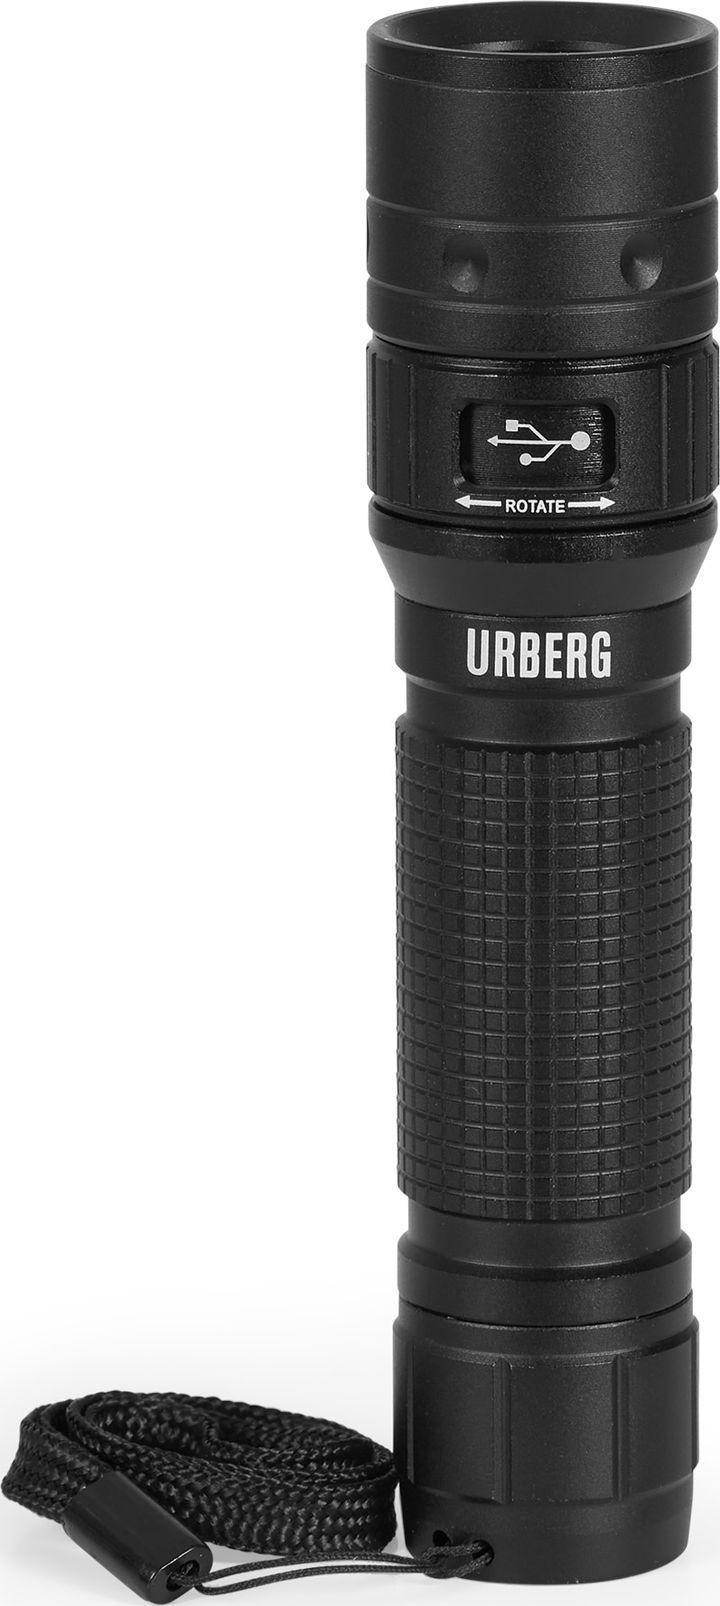 Flashlight 1000 LM Black Urberg